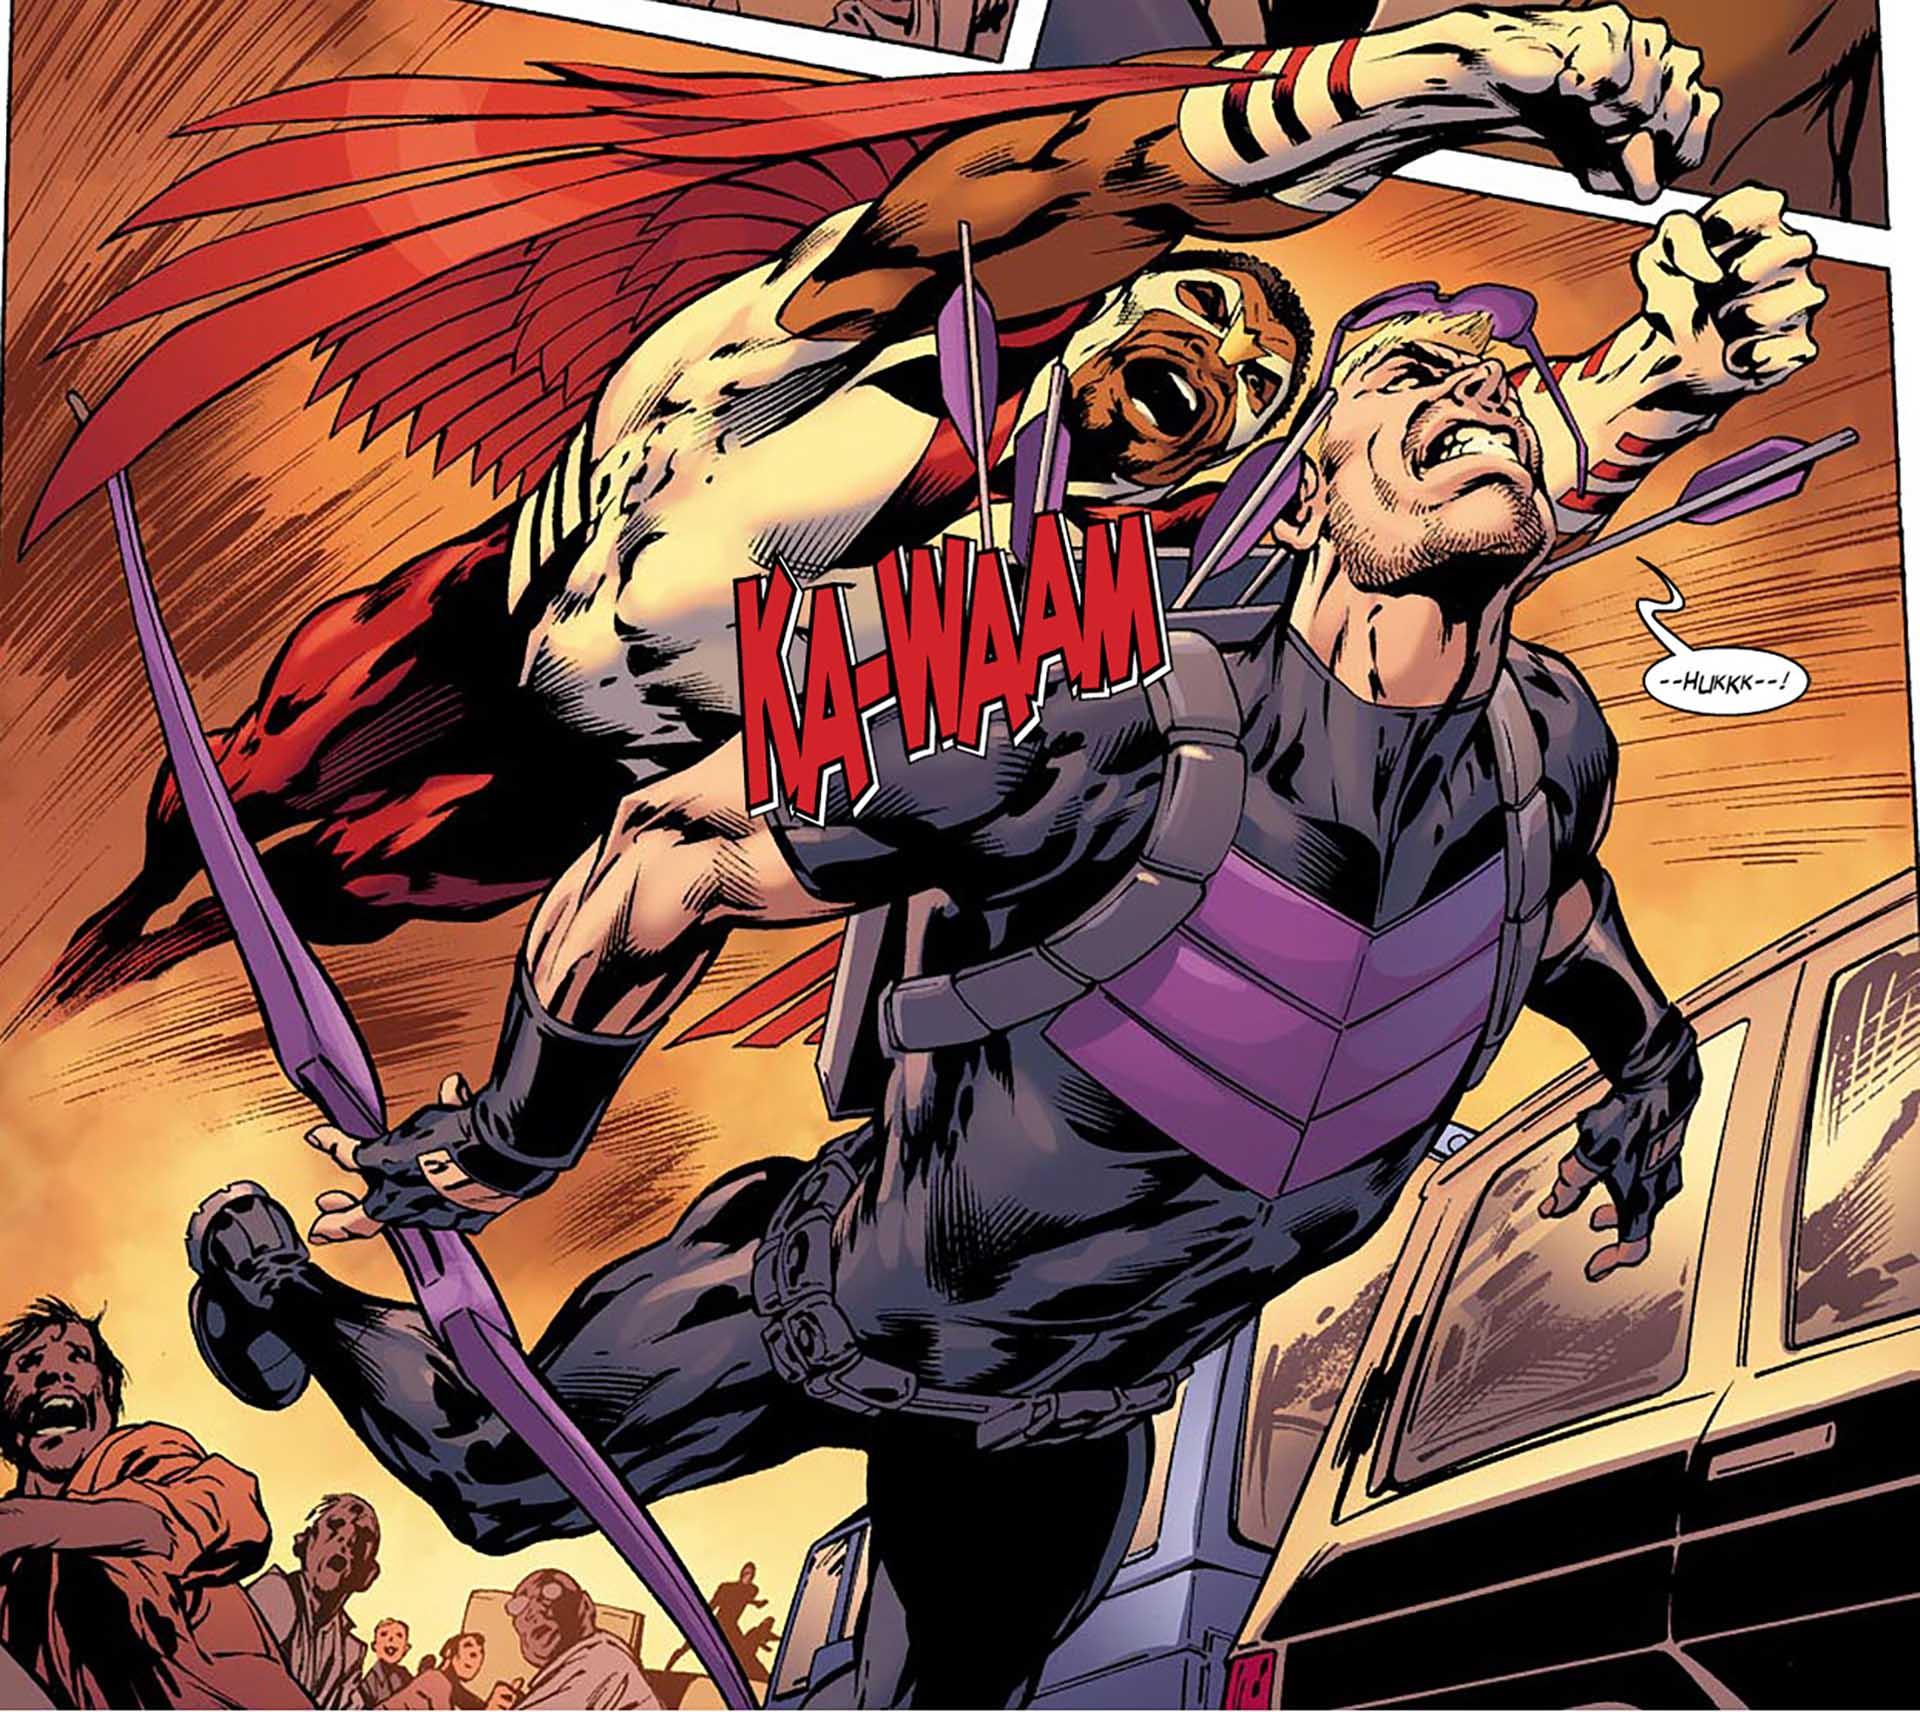 hawkeye - clint barton - marvel comics - avengers - مارول کامیکس - هاوک آی - کلینت بارتون - انتقام جویان - اونجرز